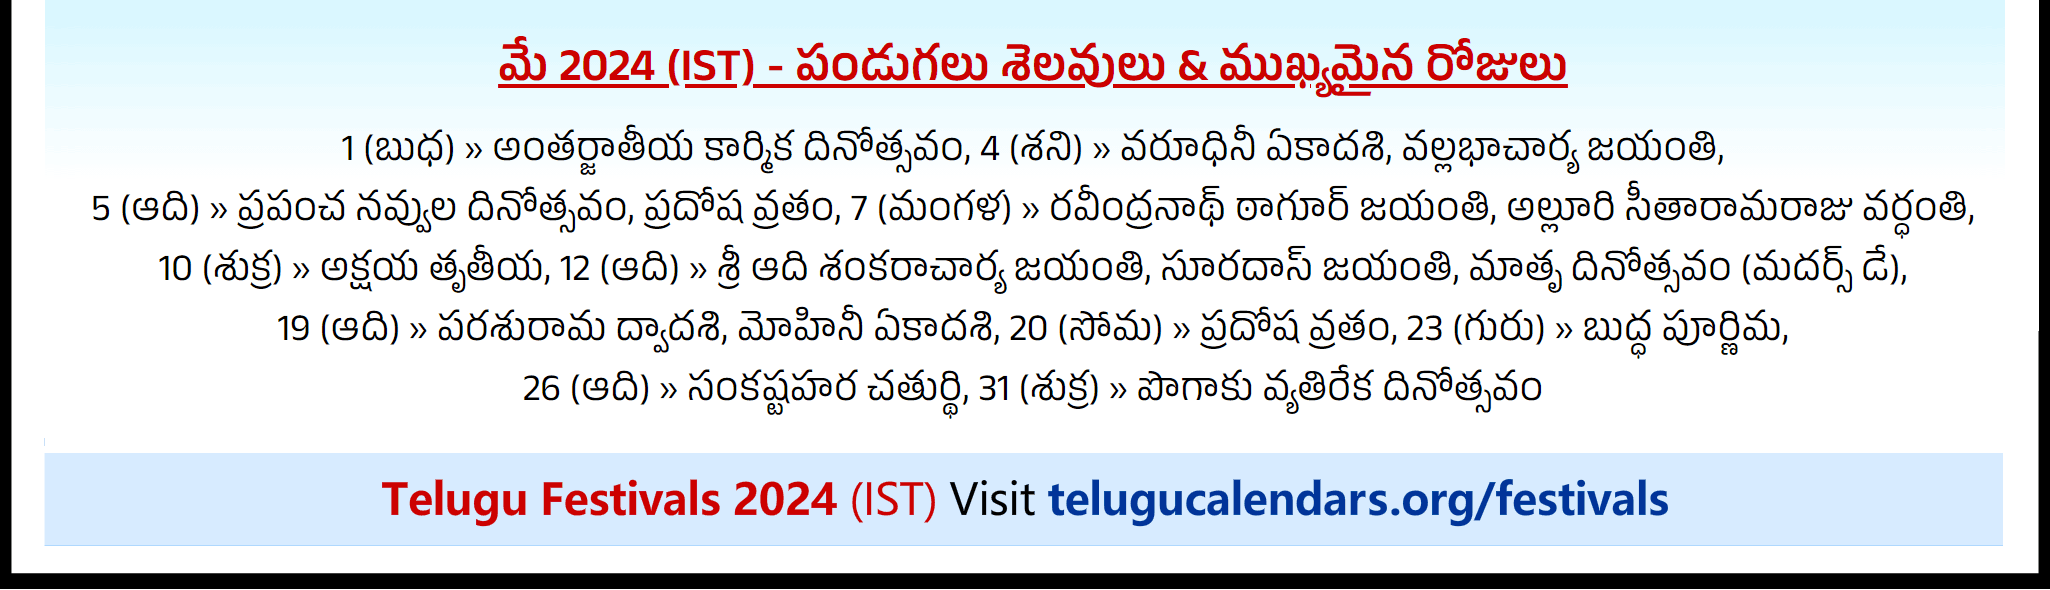 Telugu Festivals 2024 May London